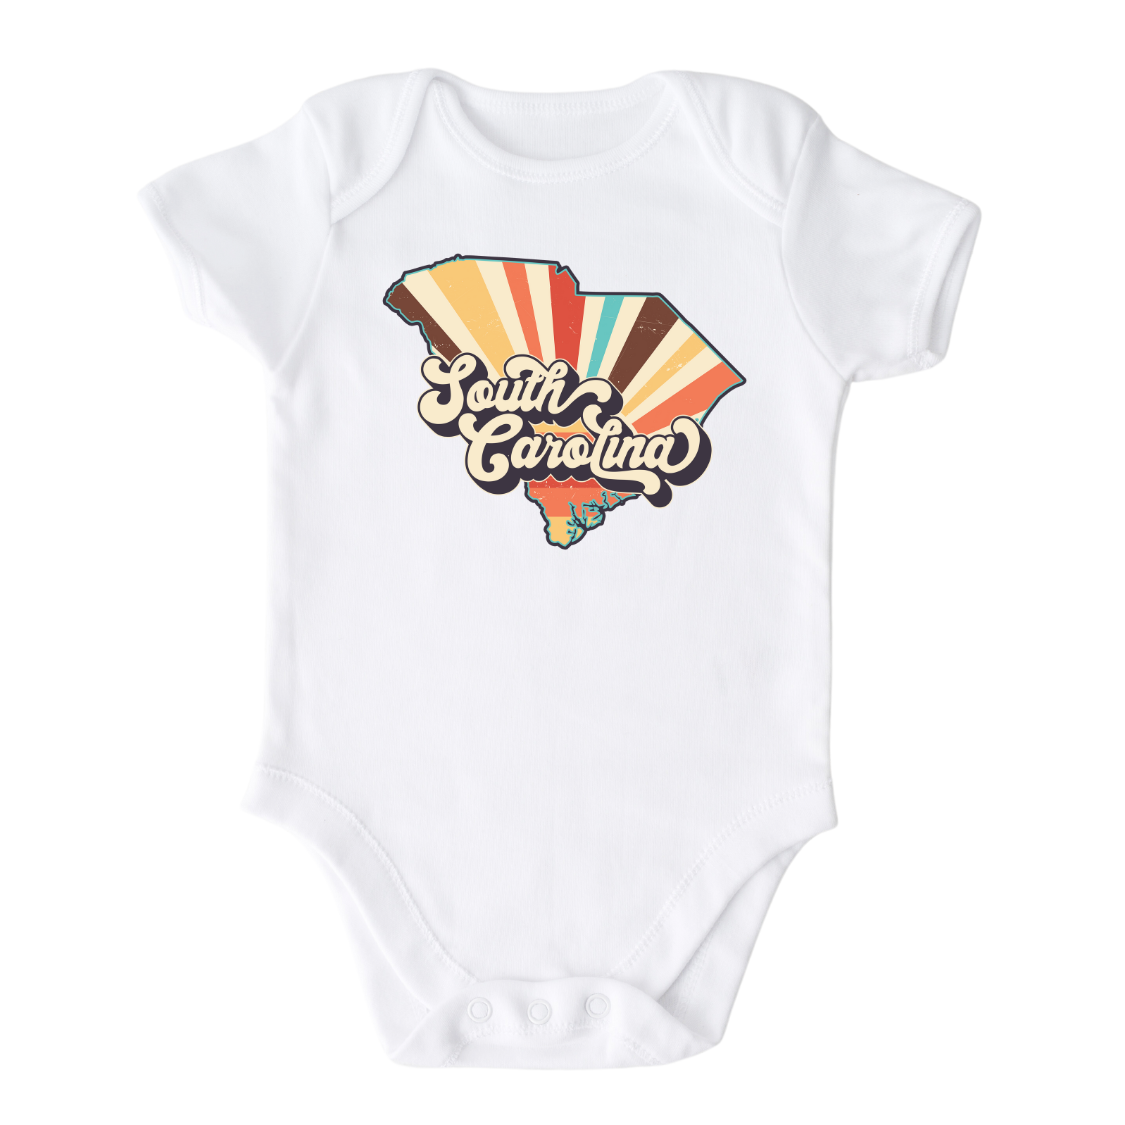 South Carolina Baby Onesie® South Carolina State Shirt for Kids Tshirt South Carolina Bodysuit